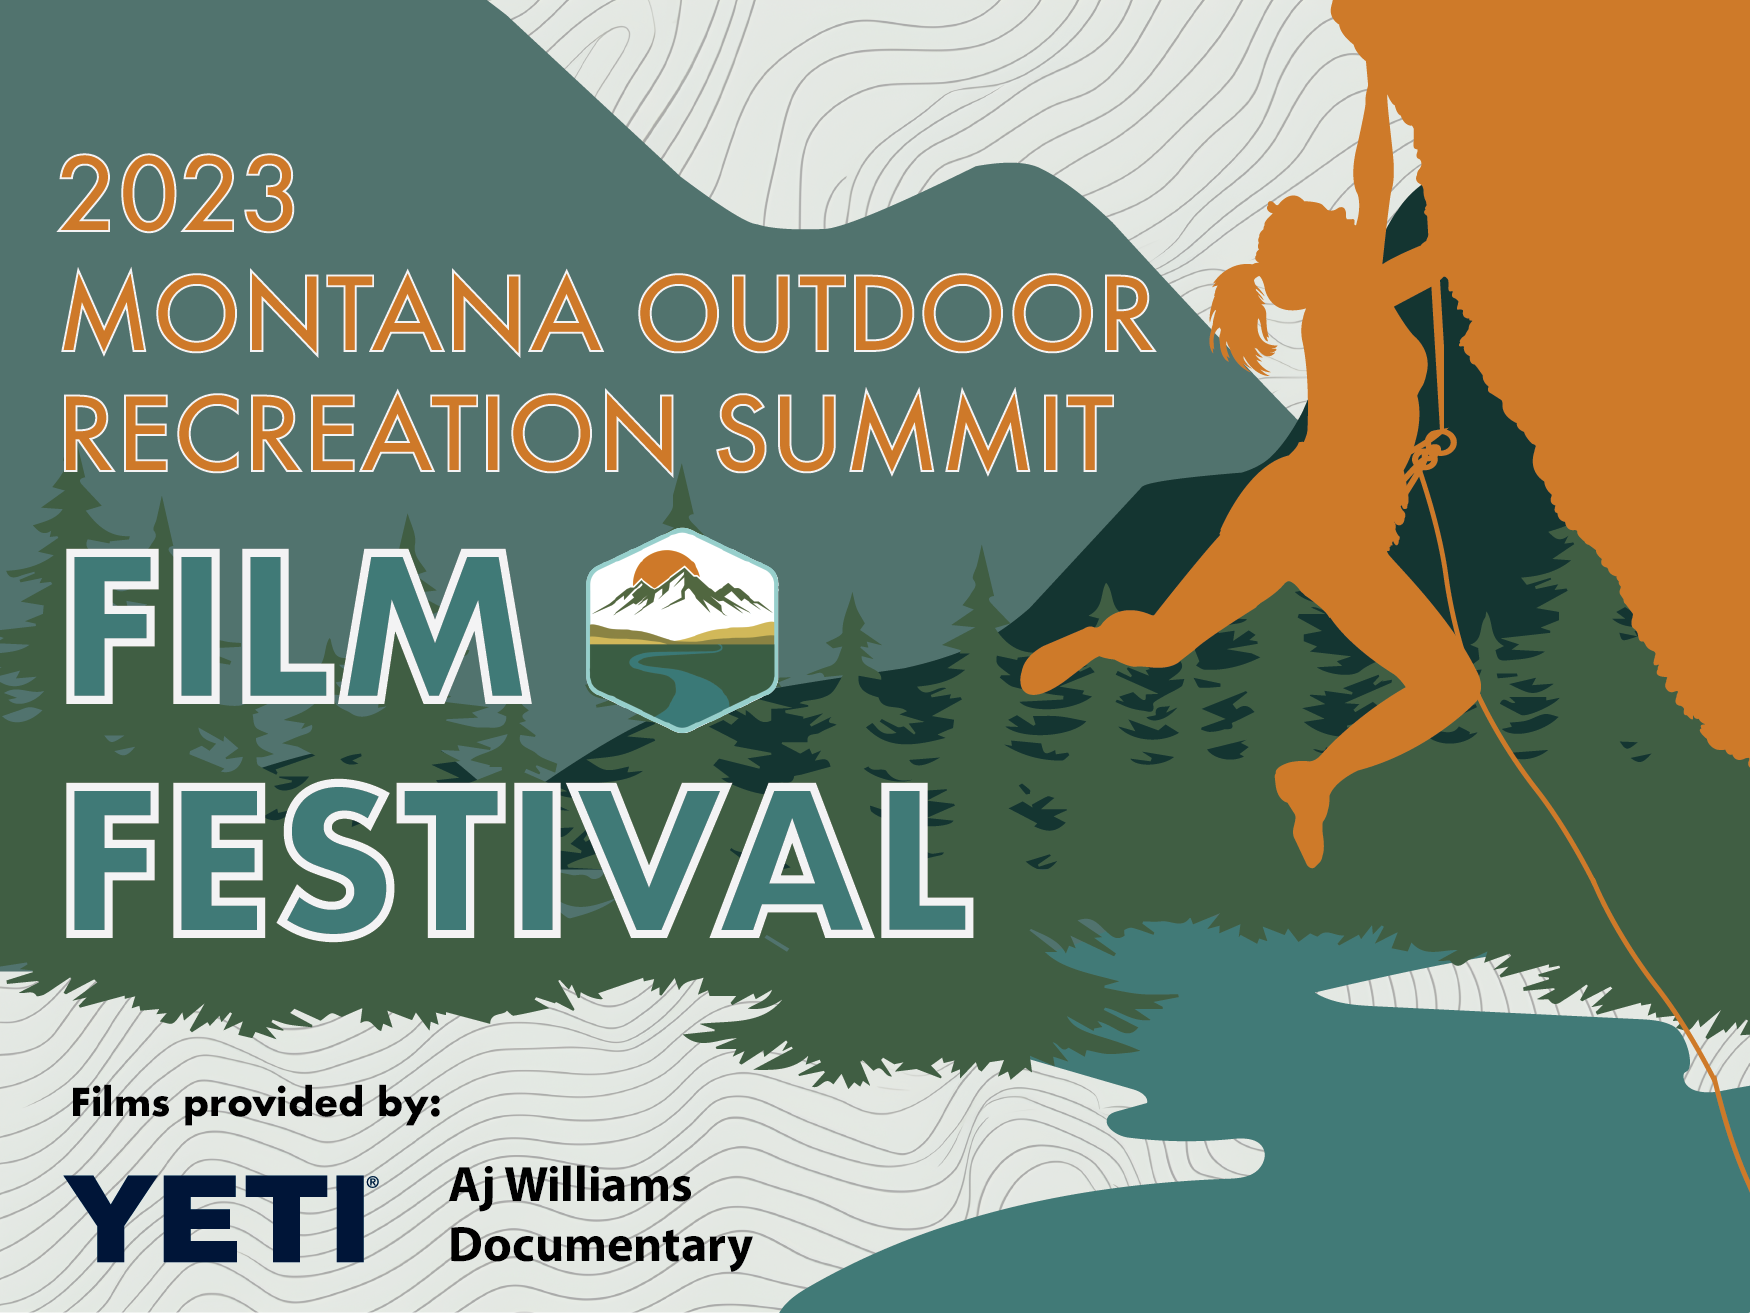 The Montana Outdoor Recreation Summit Film Festival